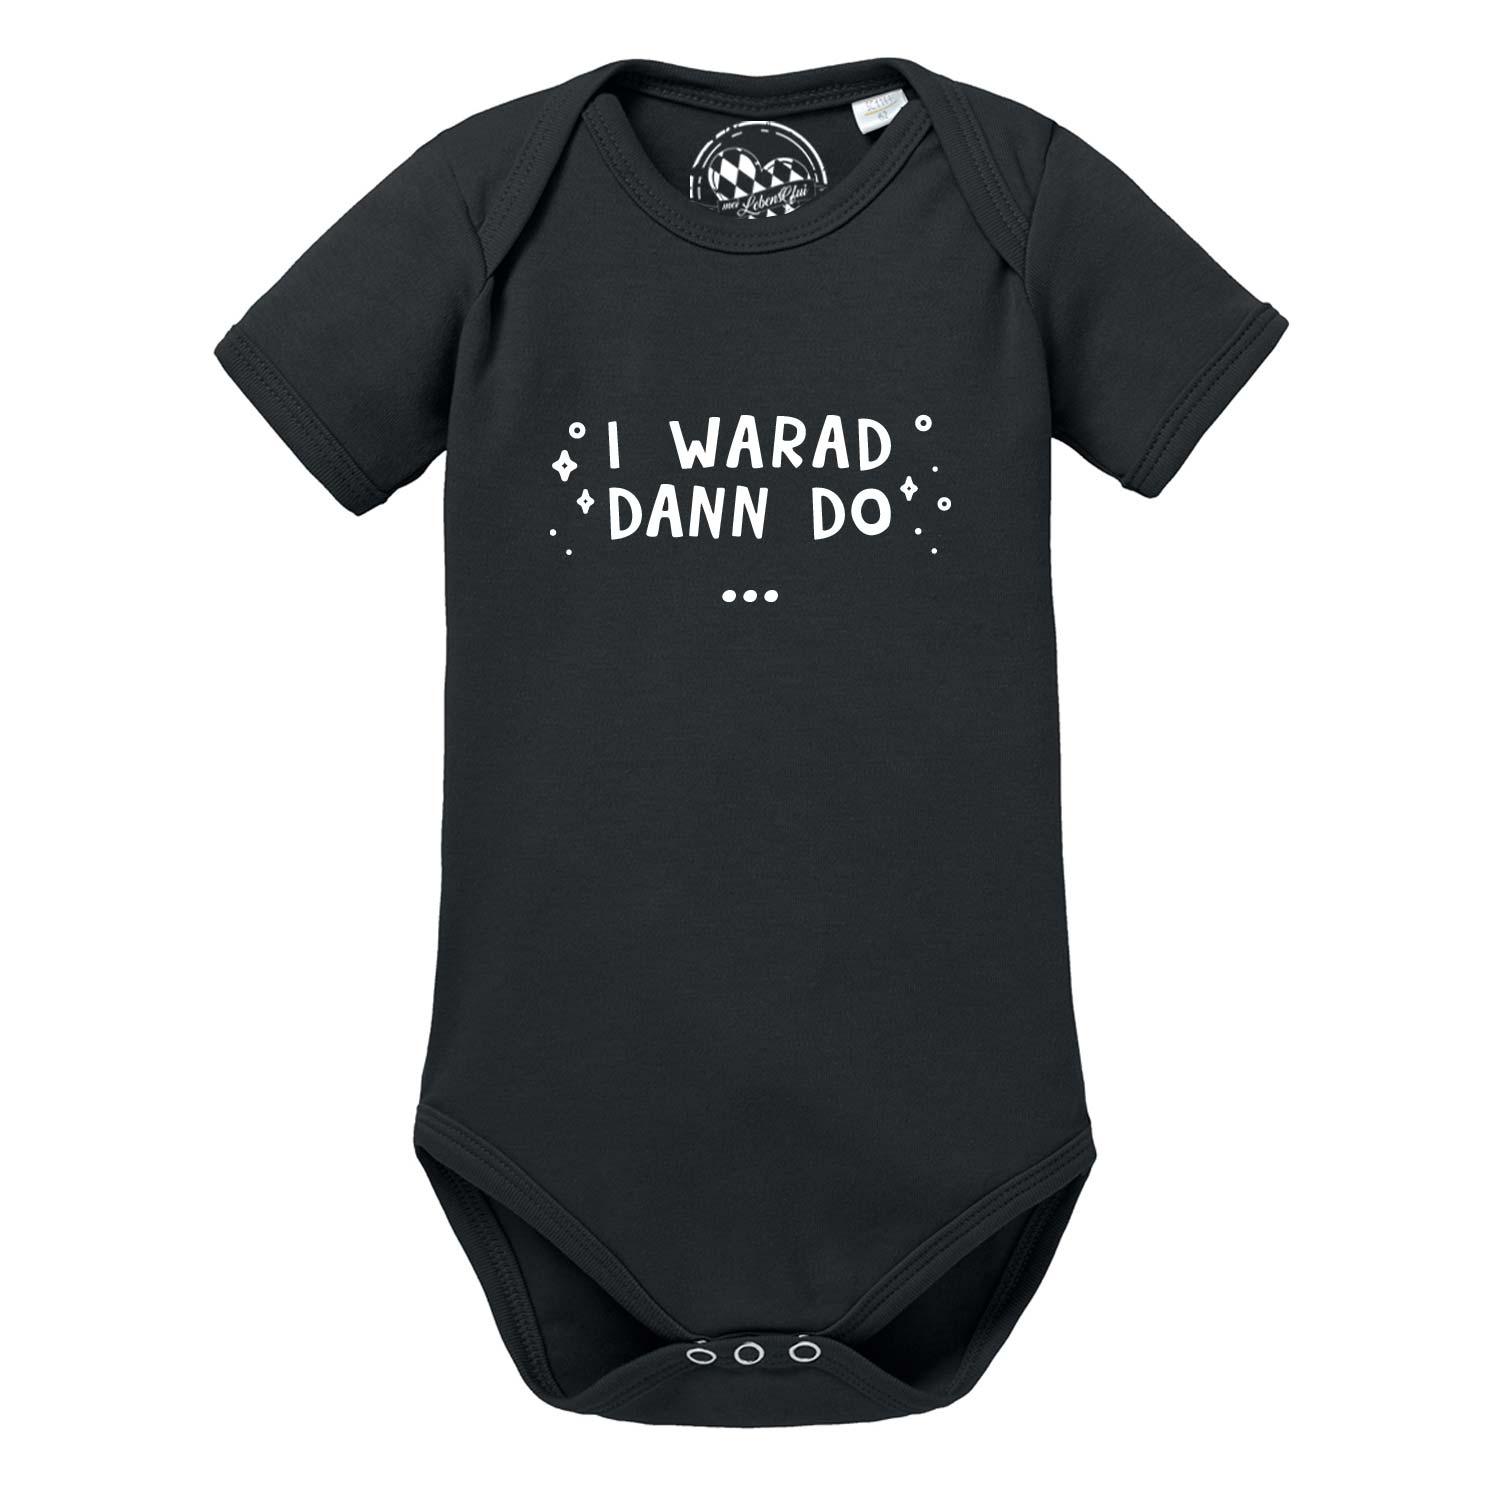 Baby Body "I warad dann do" - bavariashop - mei LebensGfui